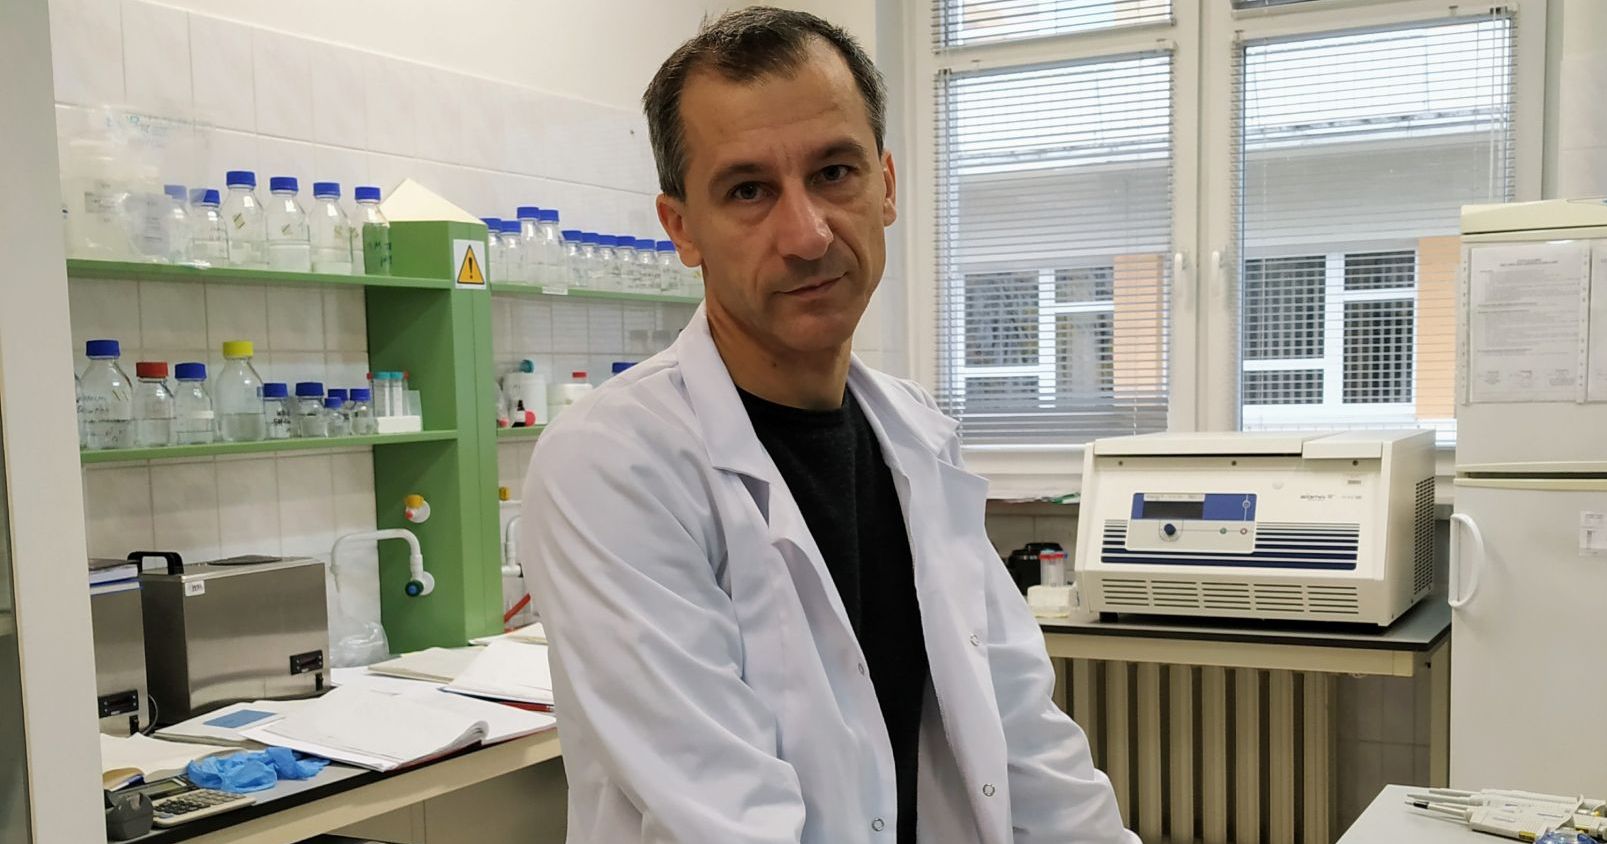 Dr hab. Rafał Butowt, prof. UMK dr hab. Rafał Butowt, prof. UMK stoi w laboratorium